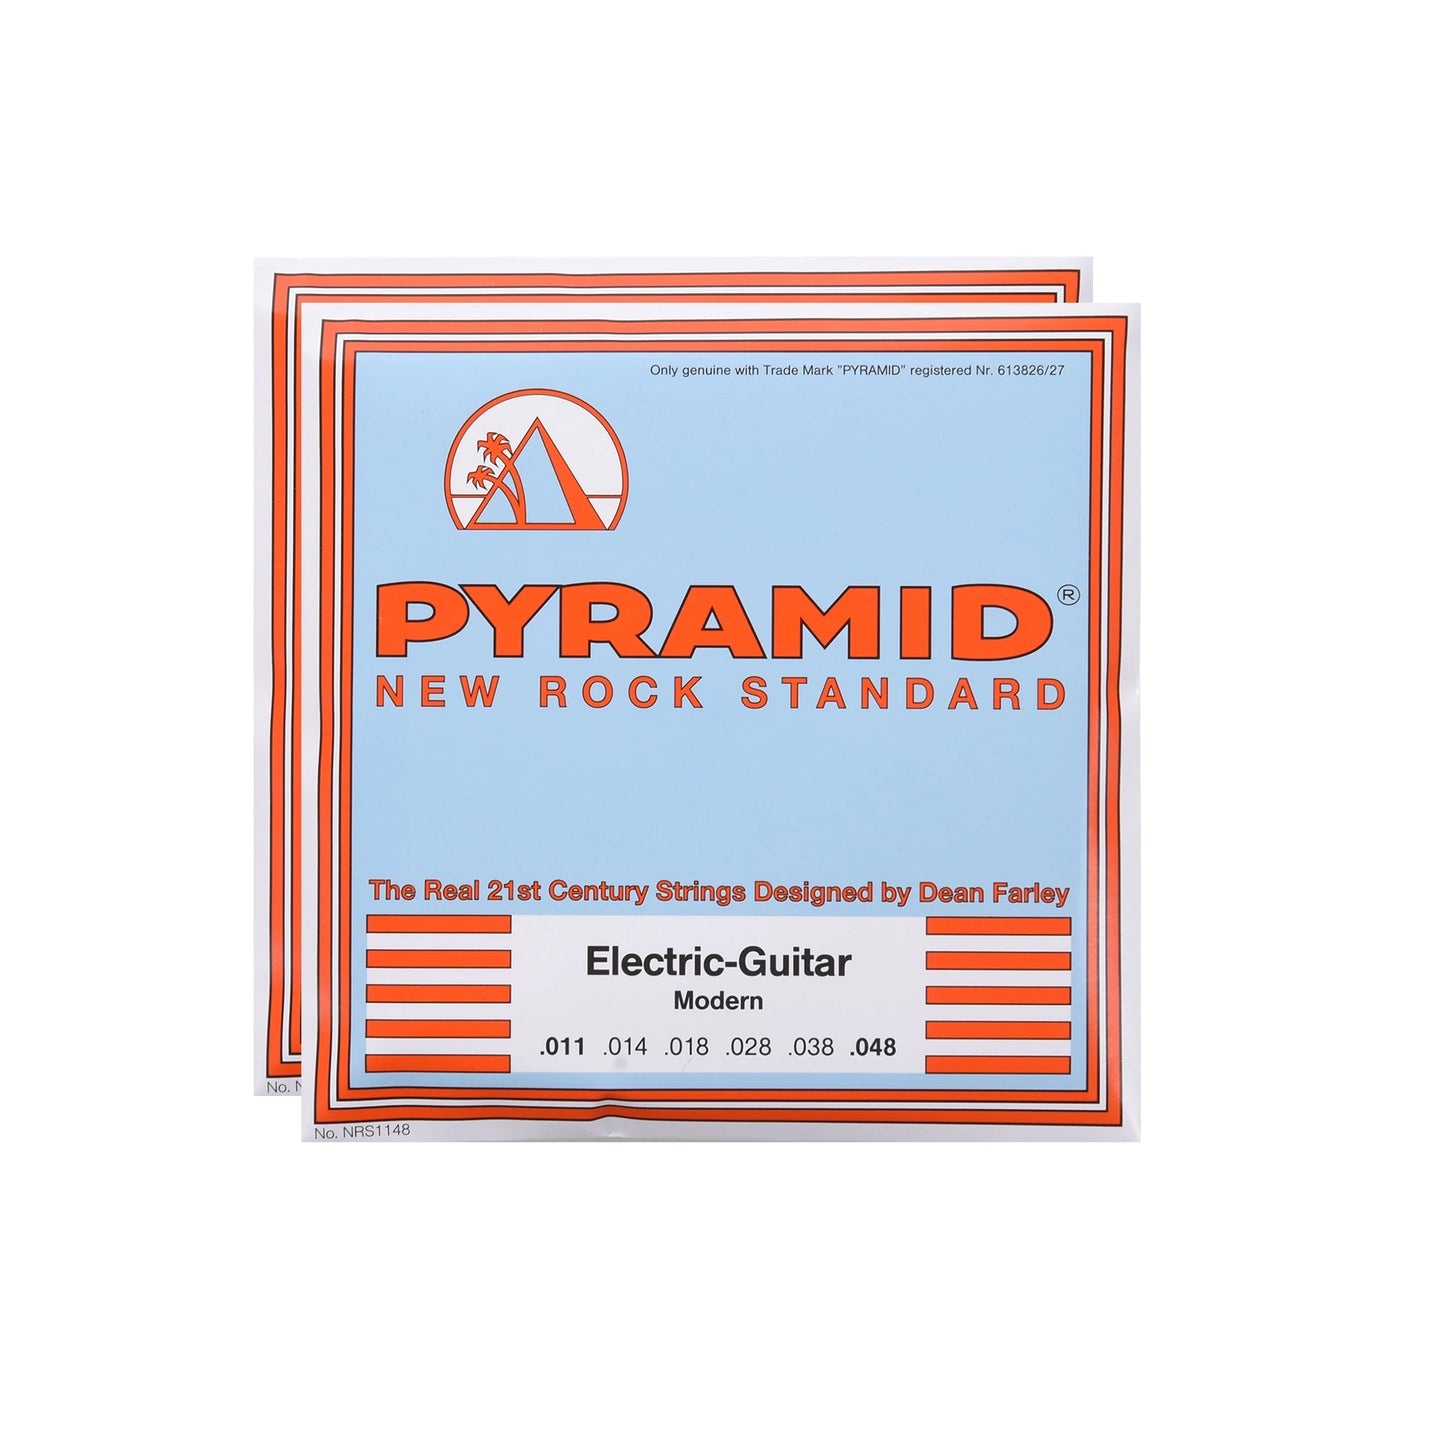 Pyramid New Rock Standard Electric Guitar Strings Modern 11-48 3 Pack Bundle